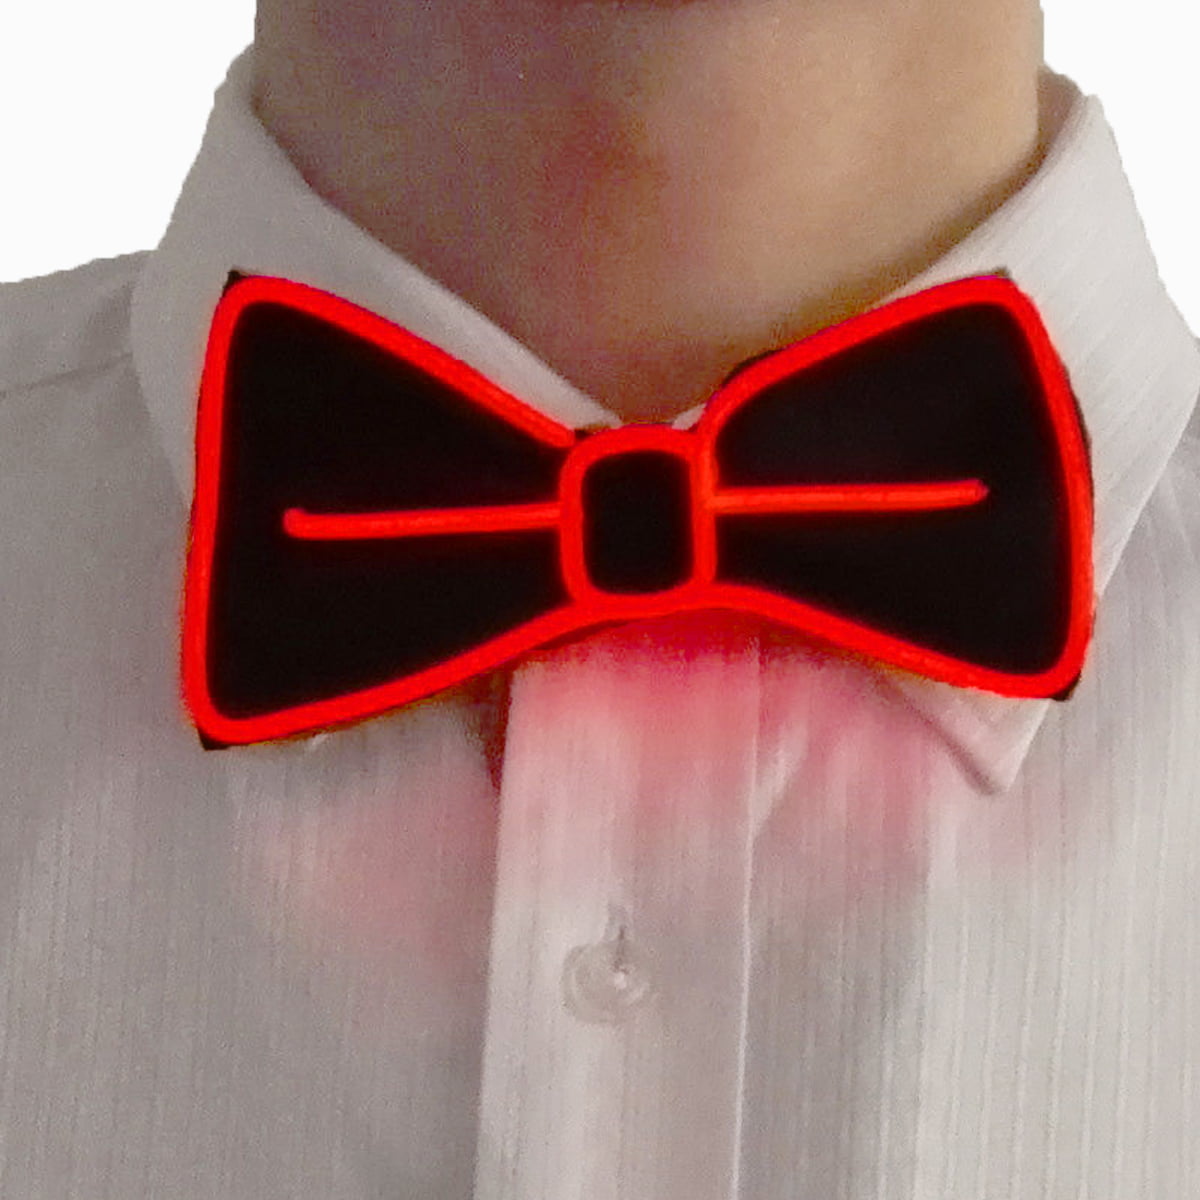 El Wire Ties Adjustable LED Necktie Fit For Light Up Halloween Wedding Accessory